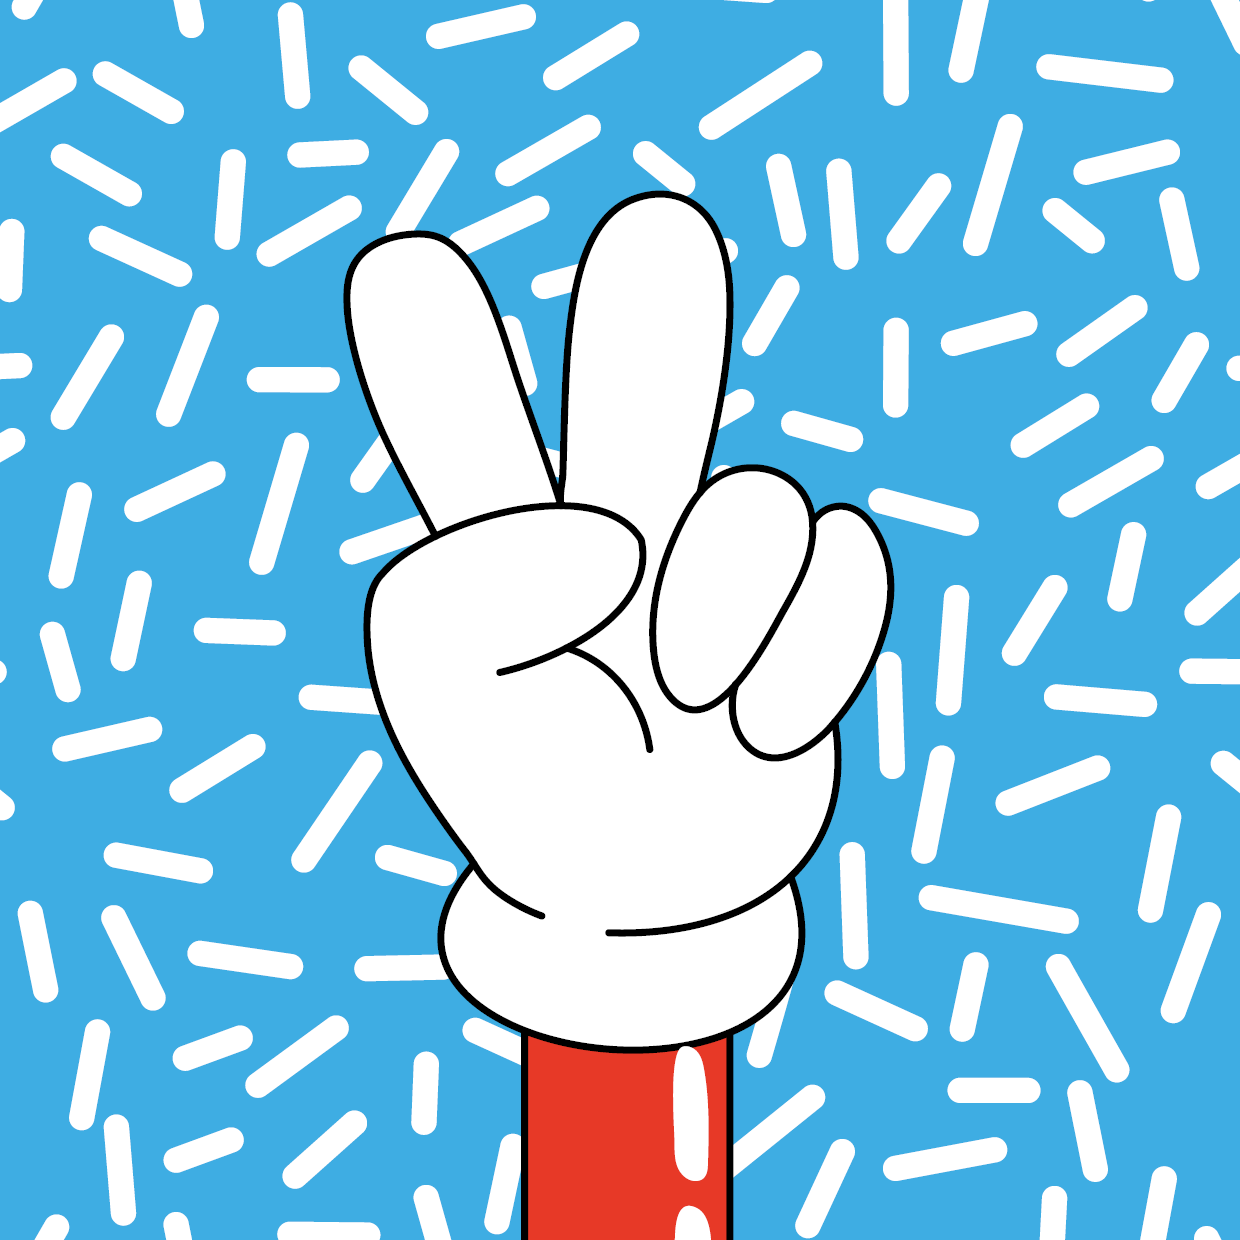 Peace Hand - Blå (Plakatkort)